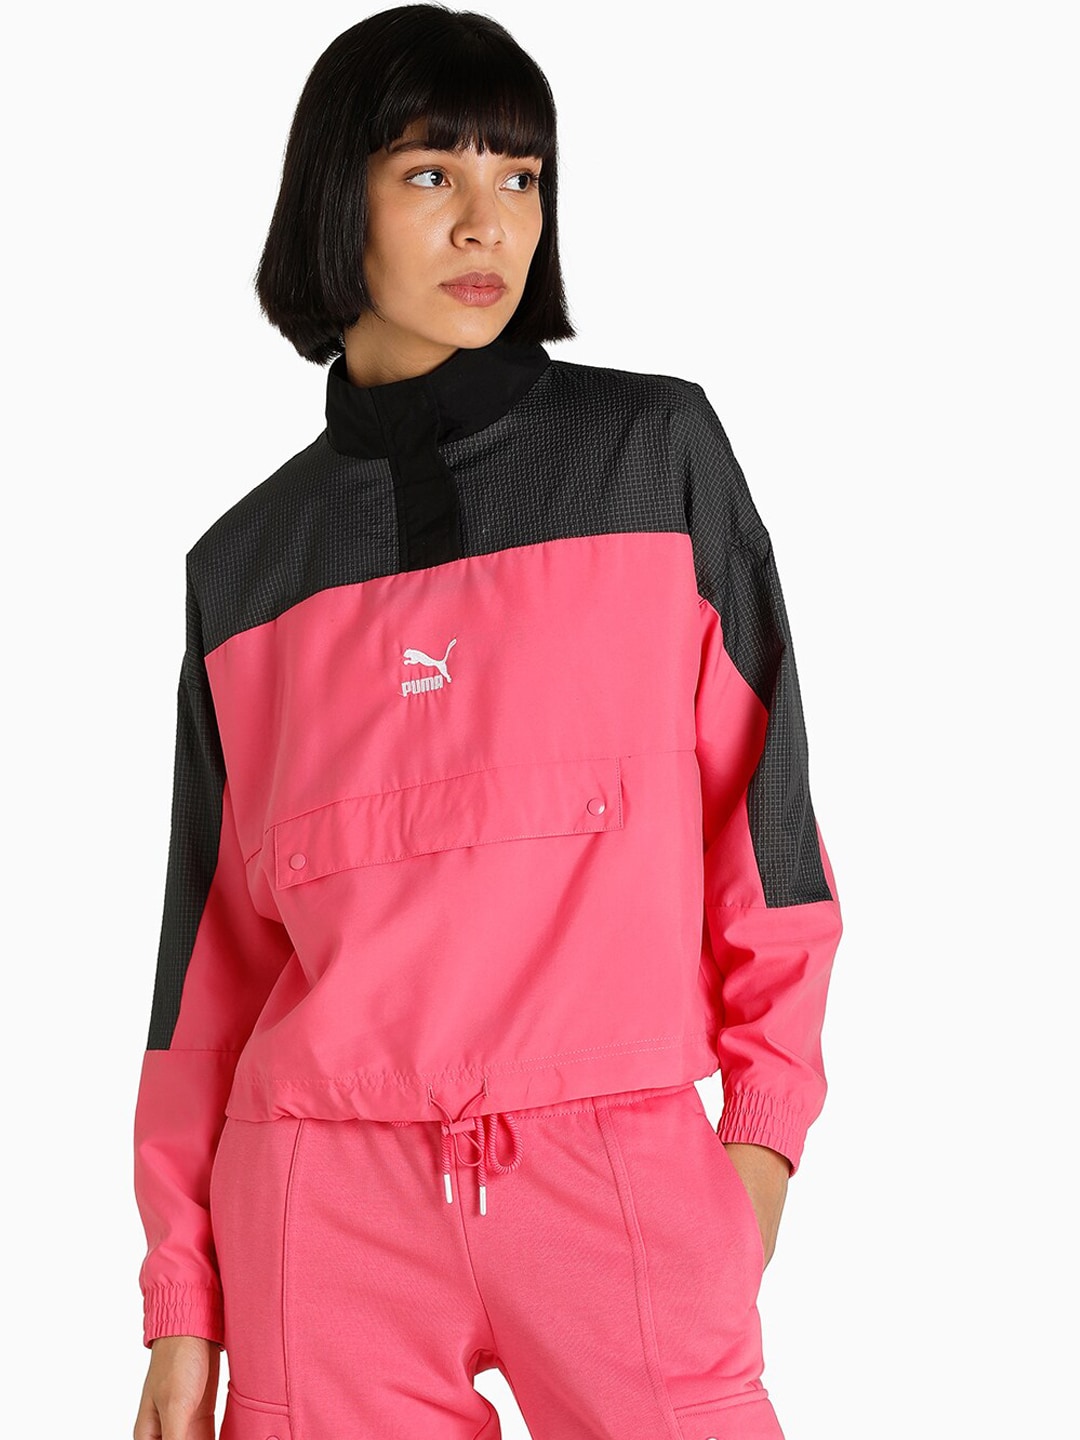 Puma Women Pink & Black Colourblocked Sporty Jacket Price in India